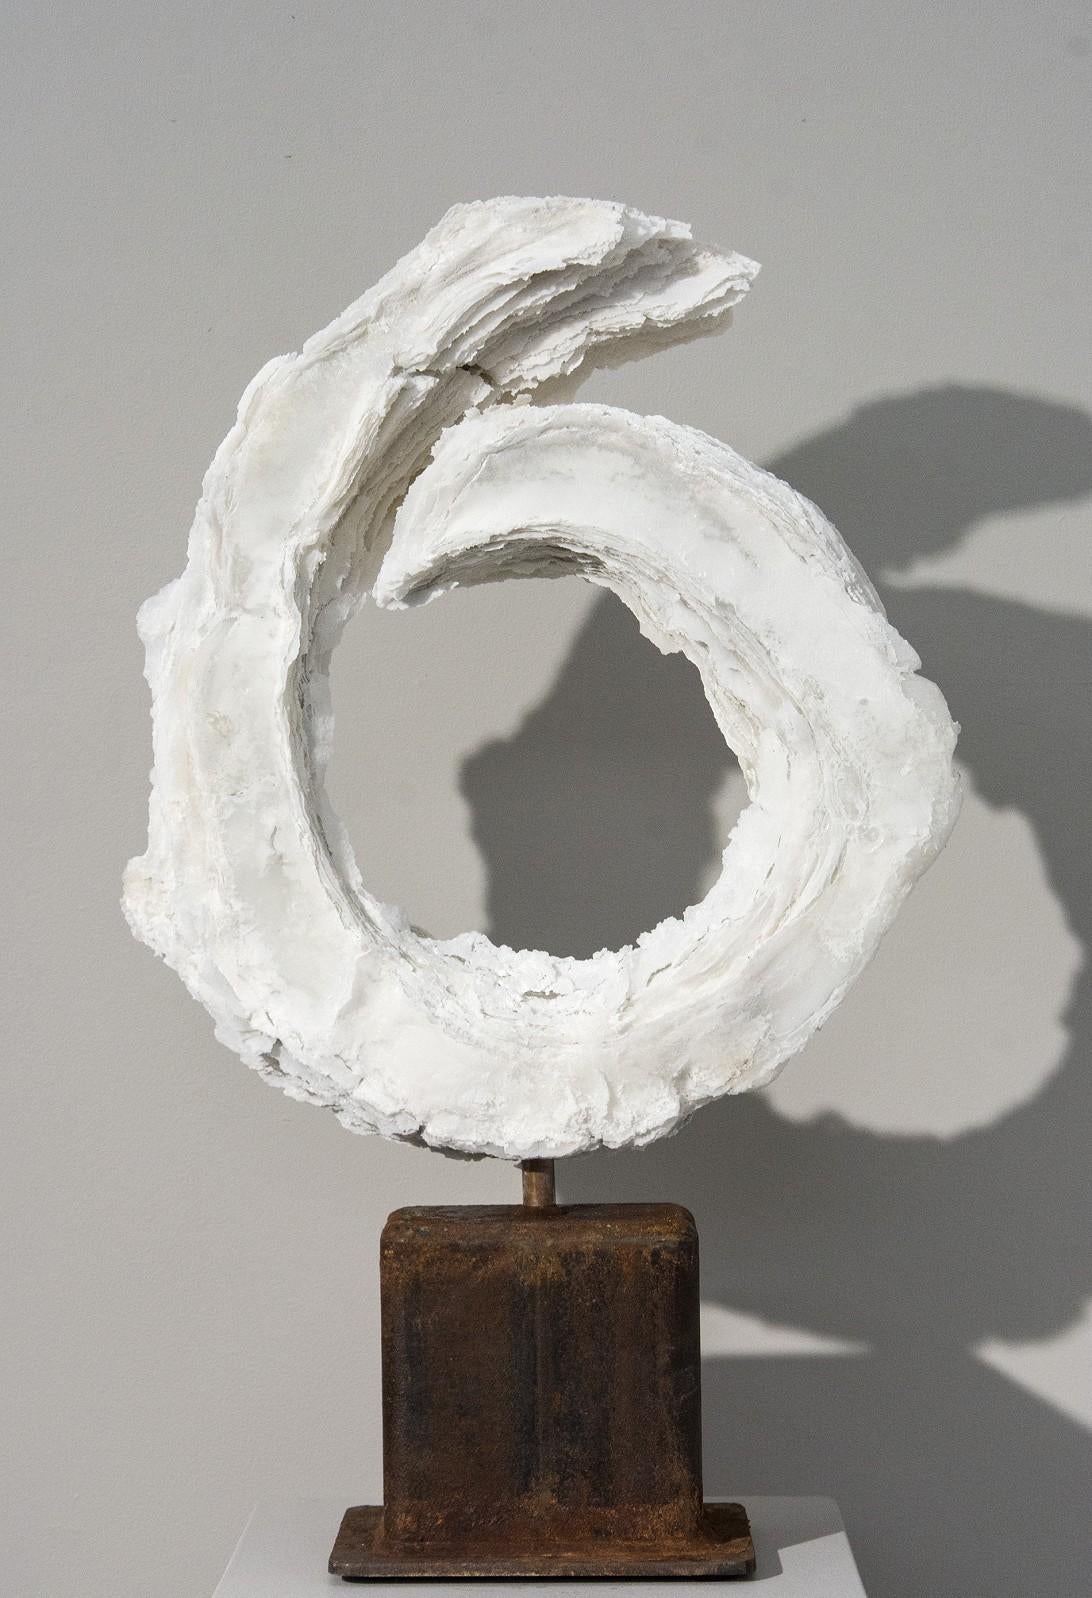 Flourish I - white, textured, abstract, modernist, layered glass frit sculpture